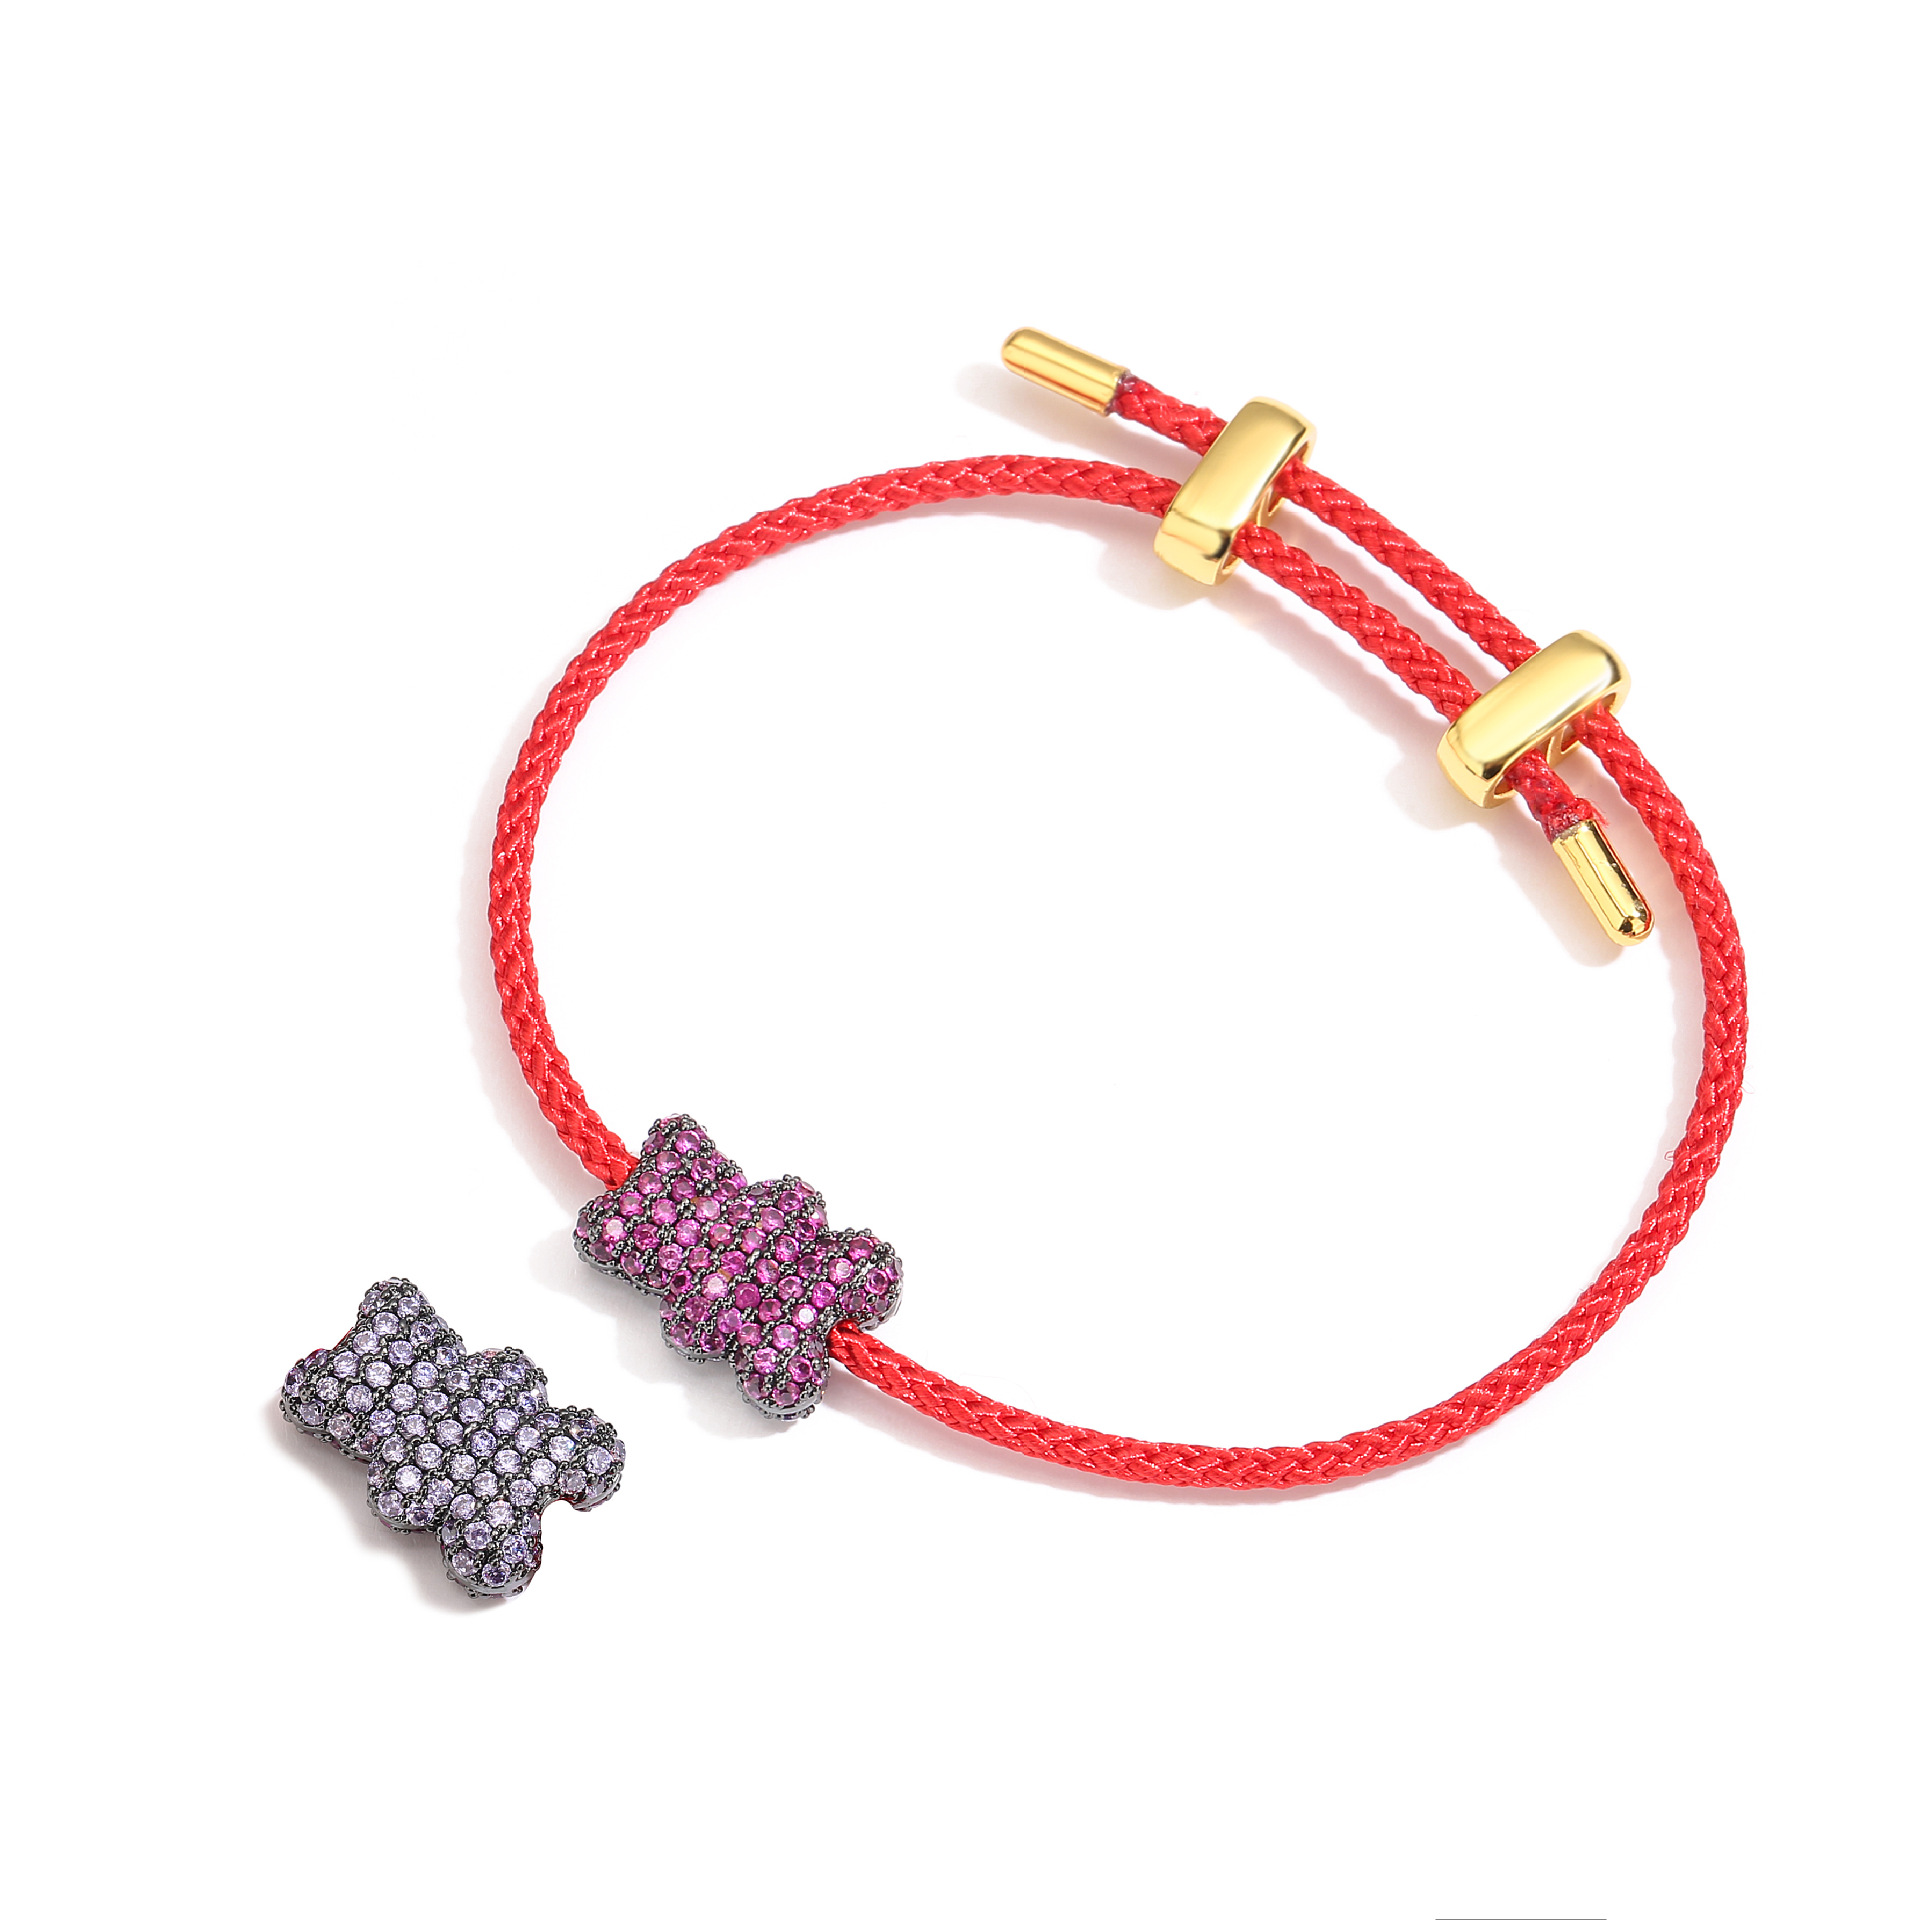 1:Red bracelet